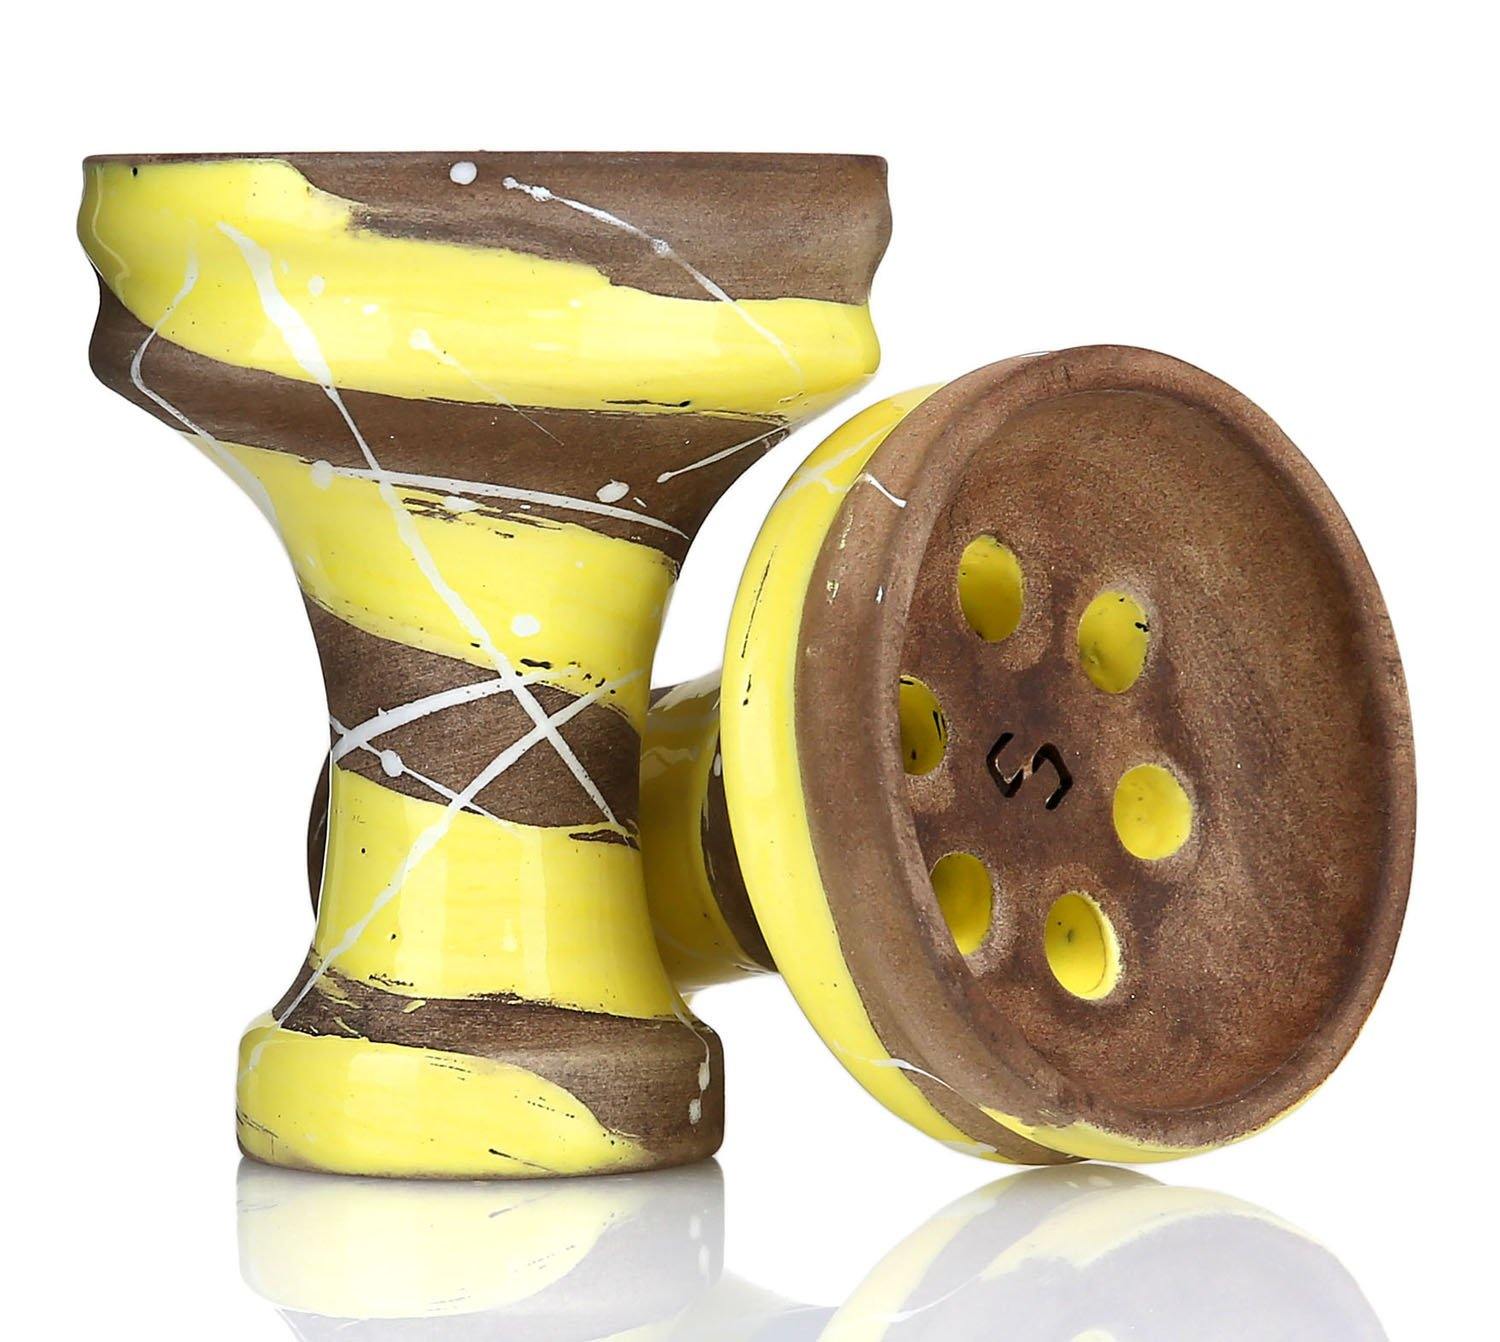 Conceptic Design Killer Shisha Bowl - Yellow - shishagear - UK